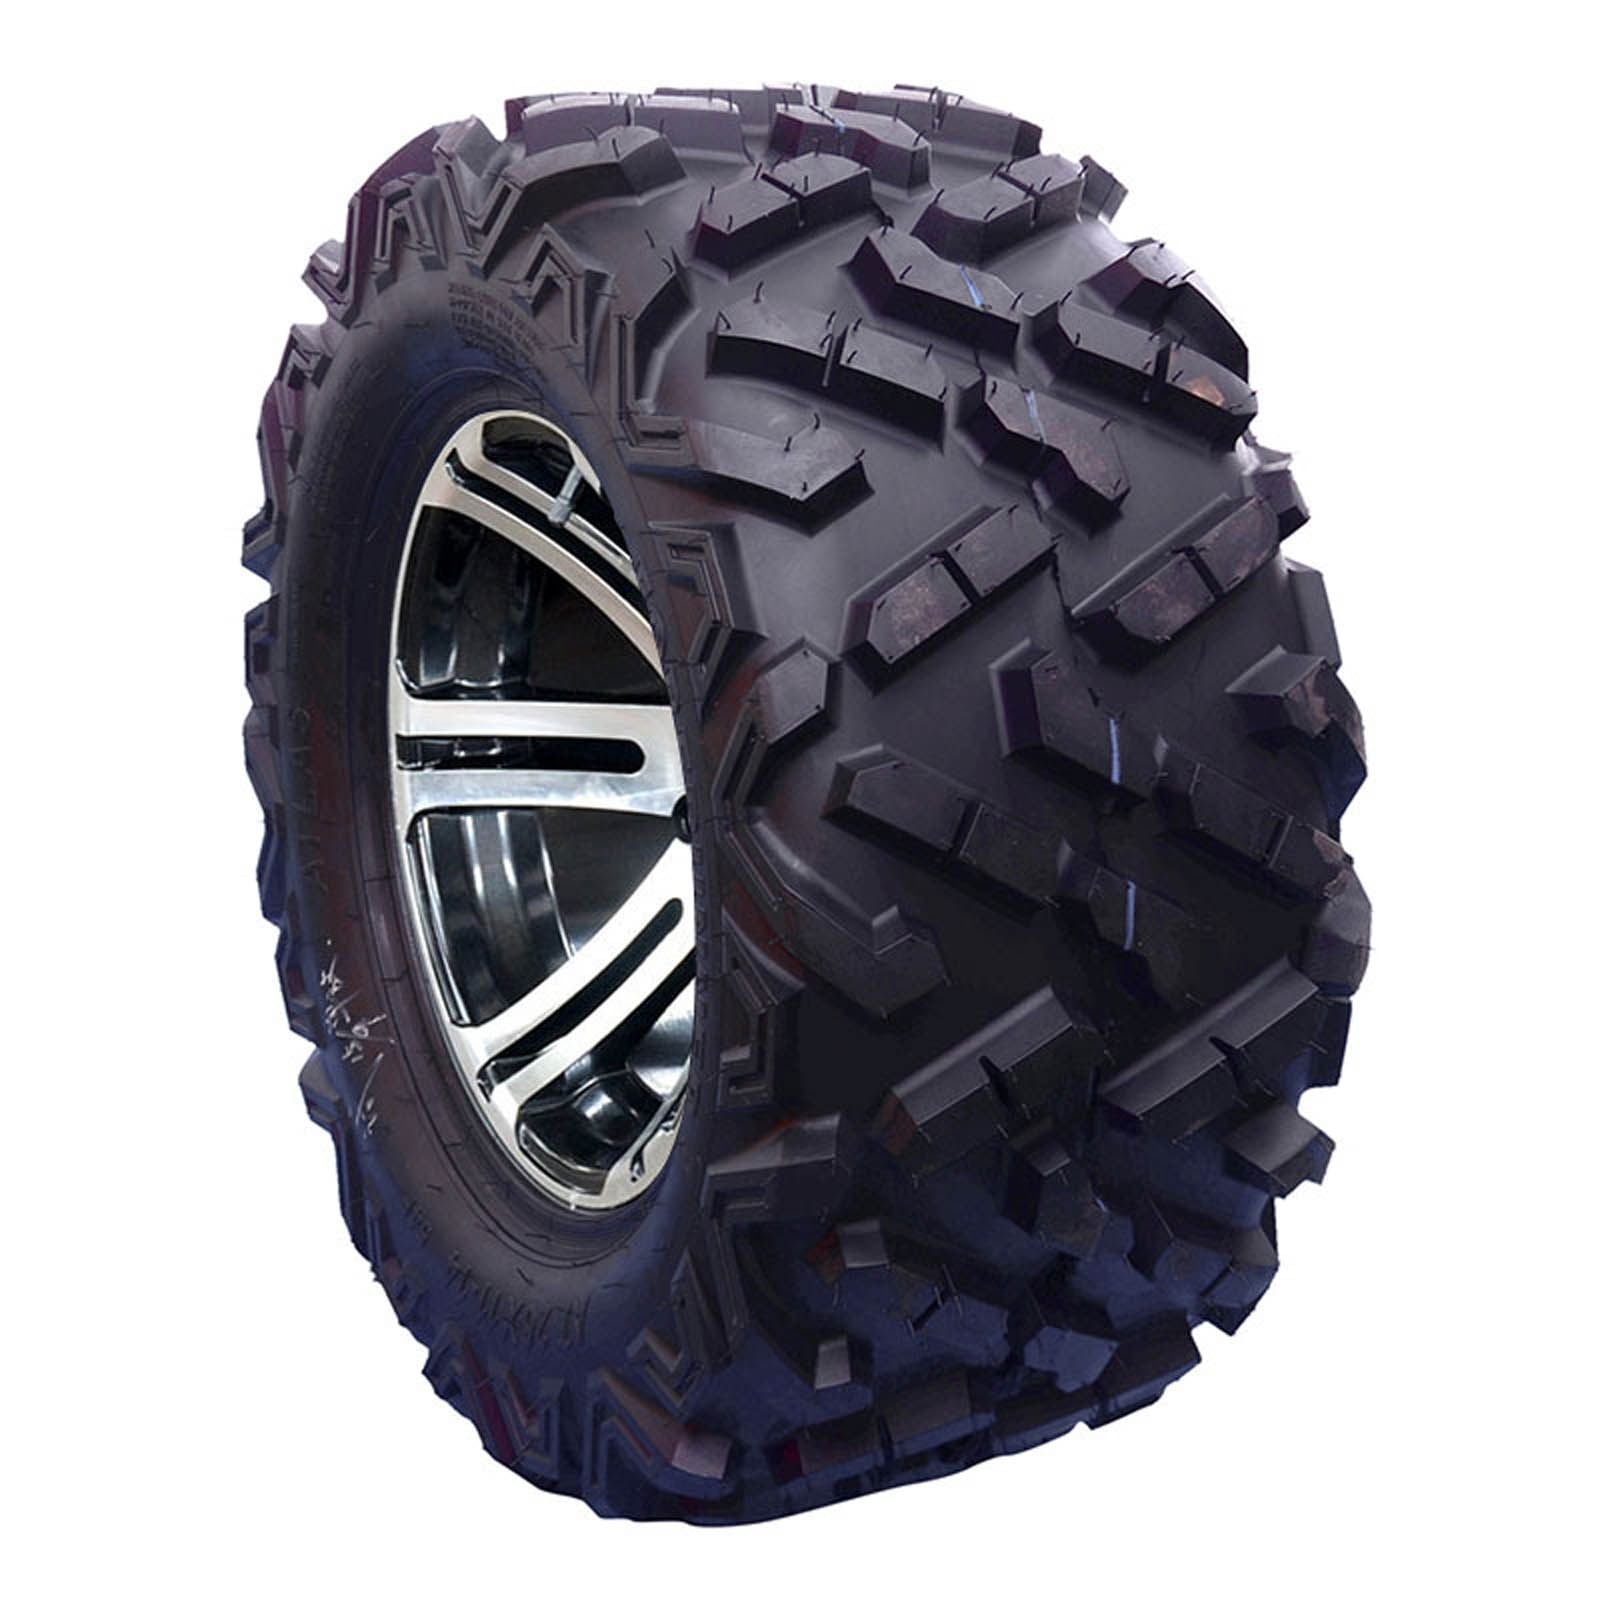 New FOREUNNER ATV Tyre Atlas - 27 x 9 x 14 (6PR TL) #14X27X9ATLAS